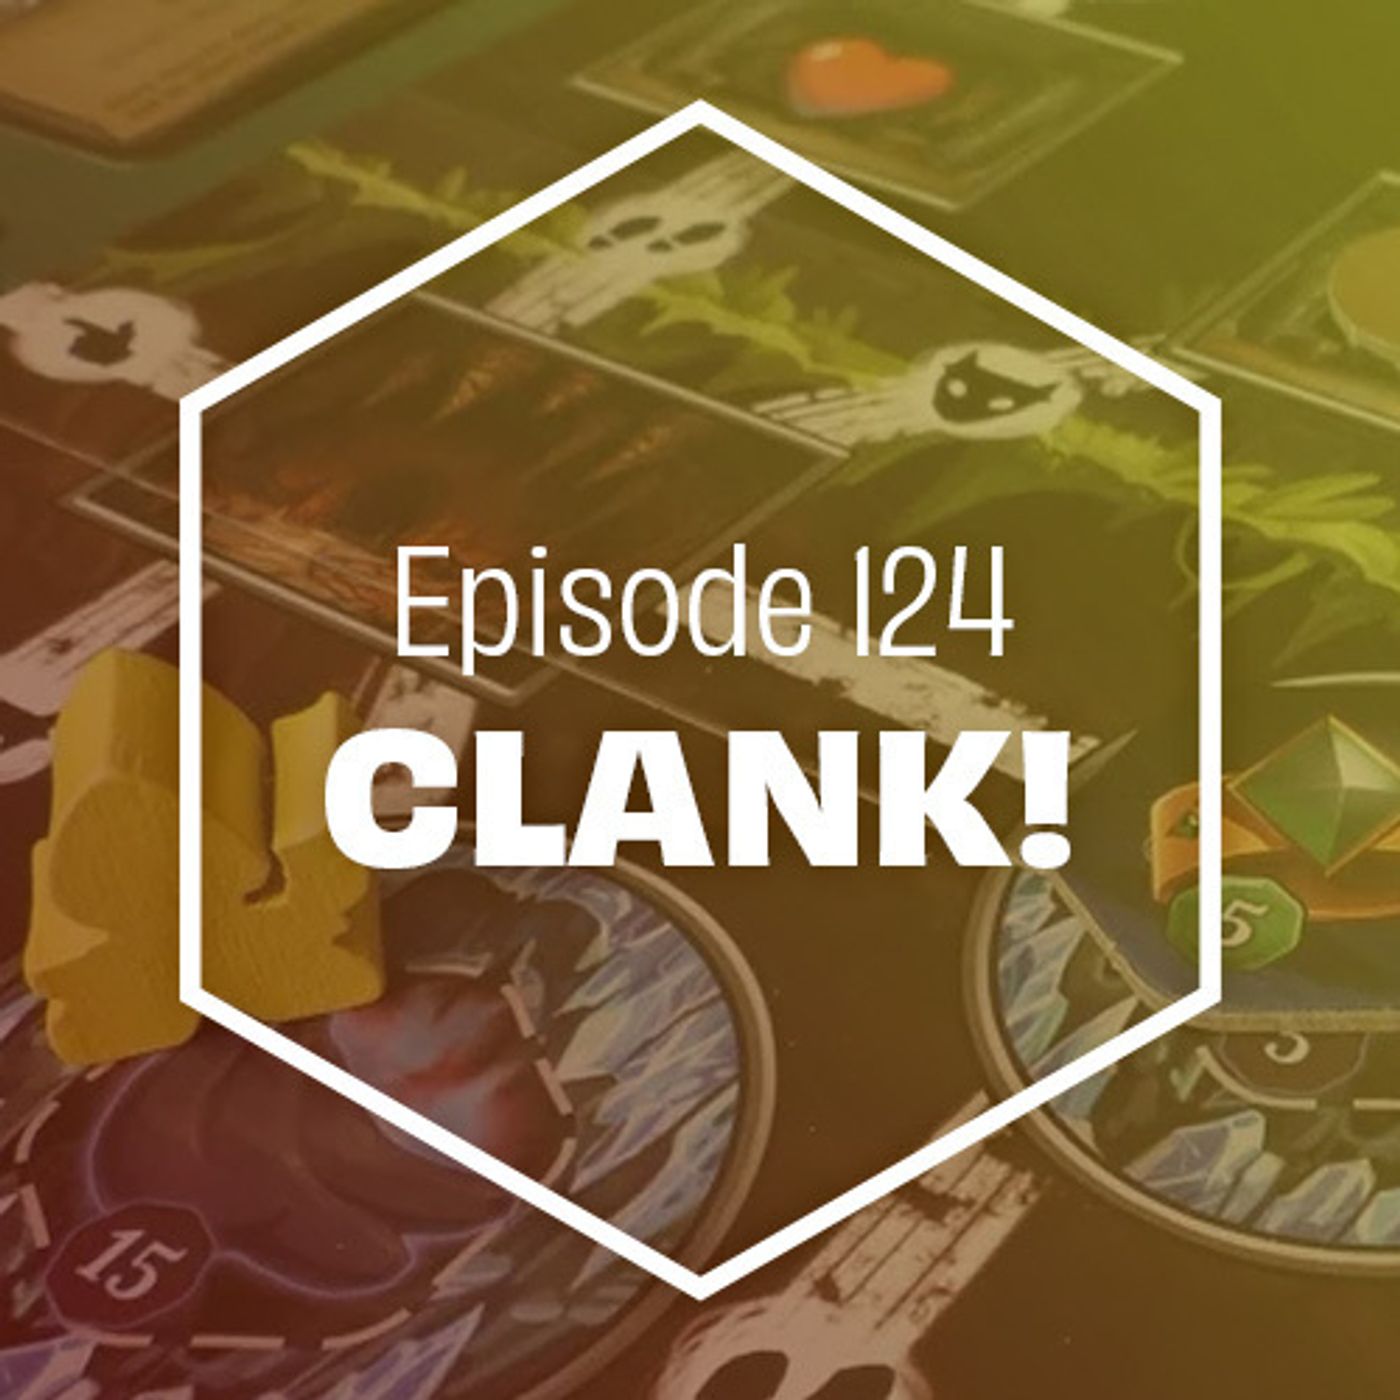 136: Clank!